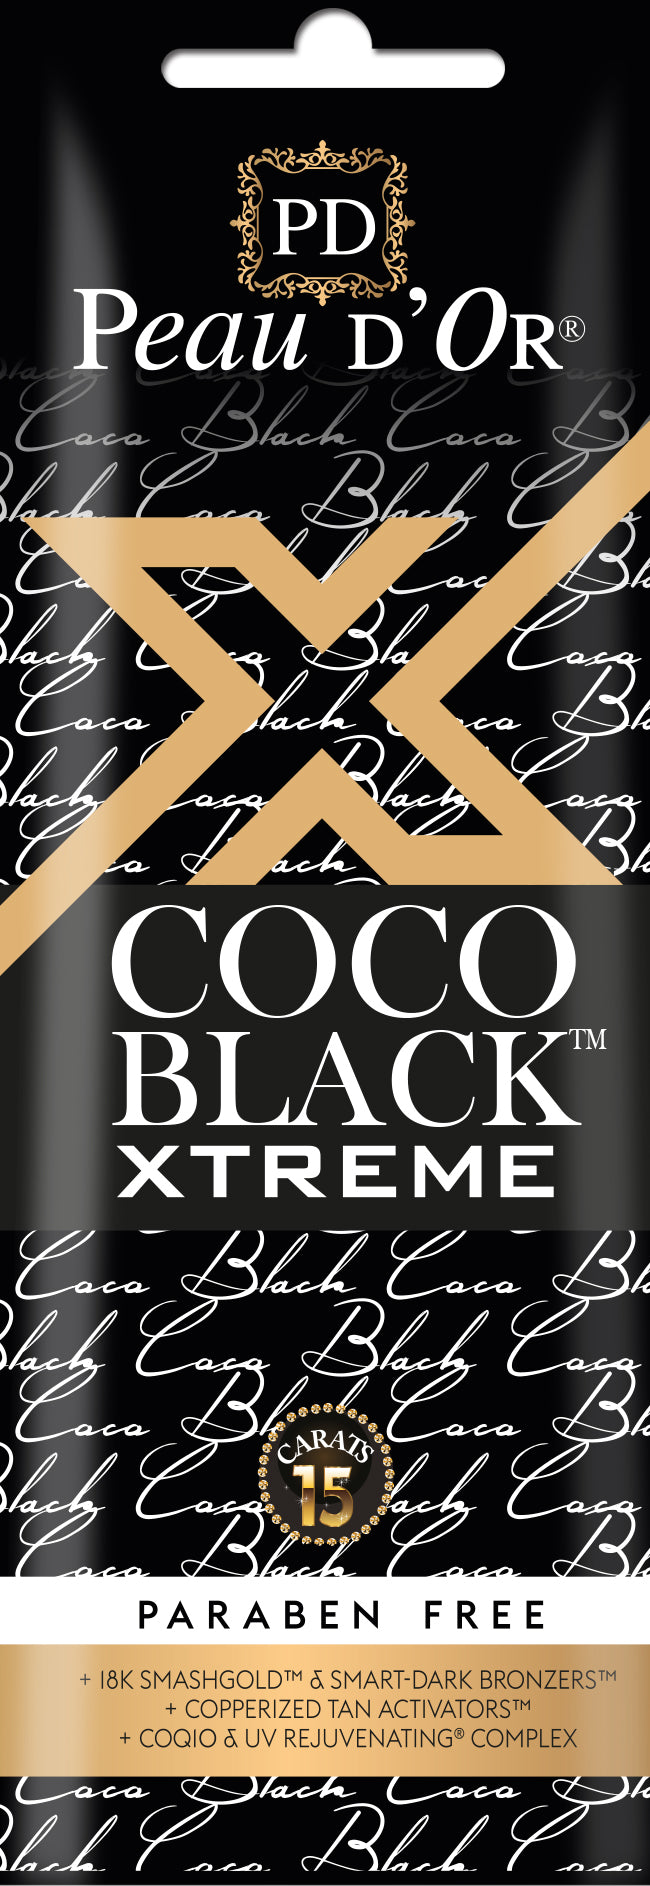 Peau d’Or Coco Black Xtreme sachet 15 ml